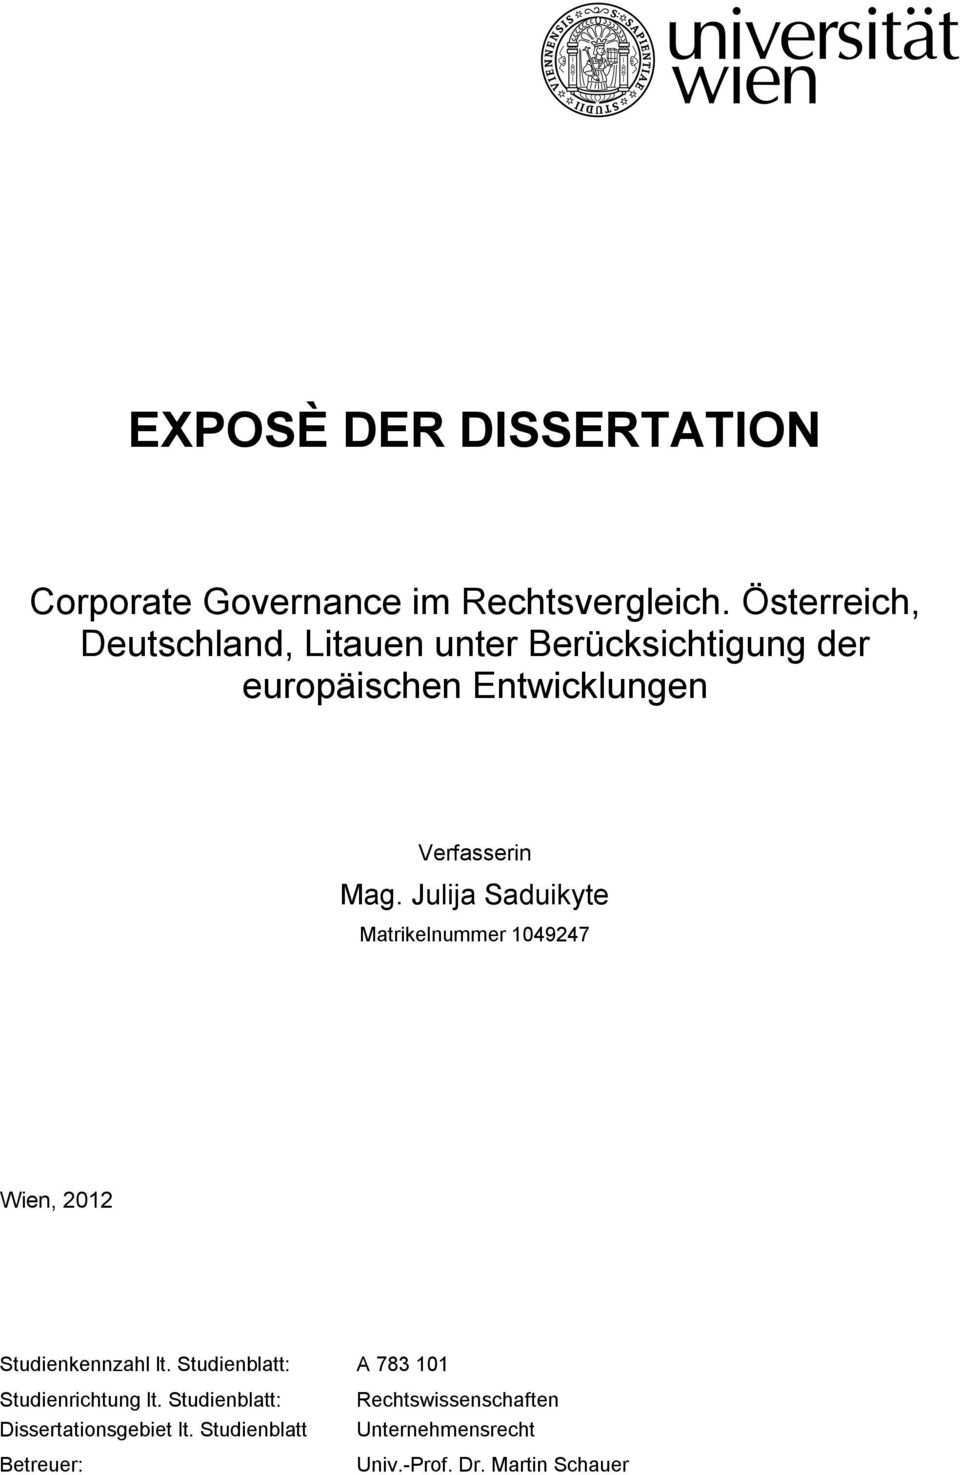 Expose Der Dissertation Pdf Free Download